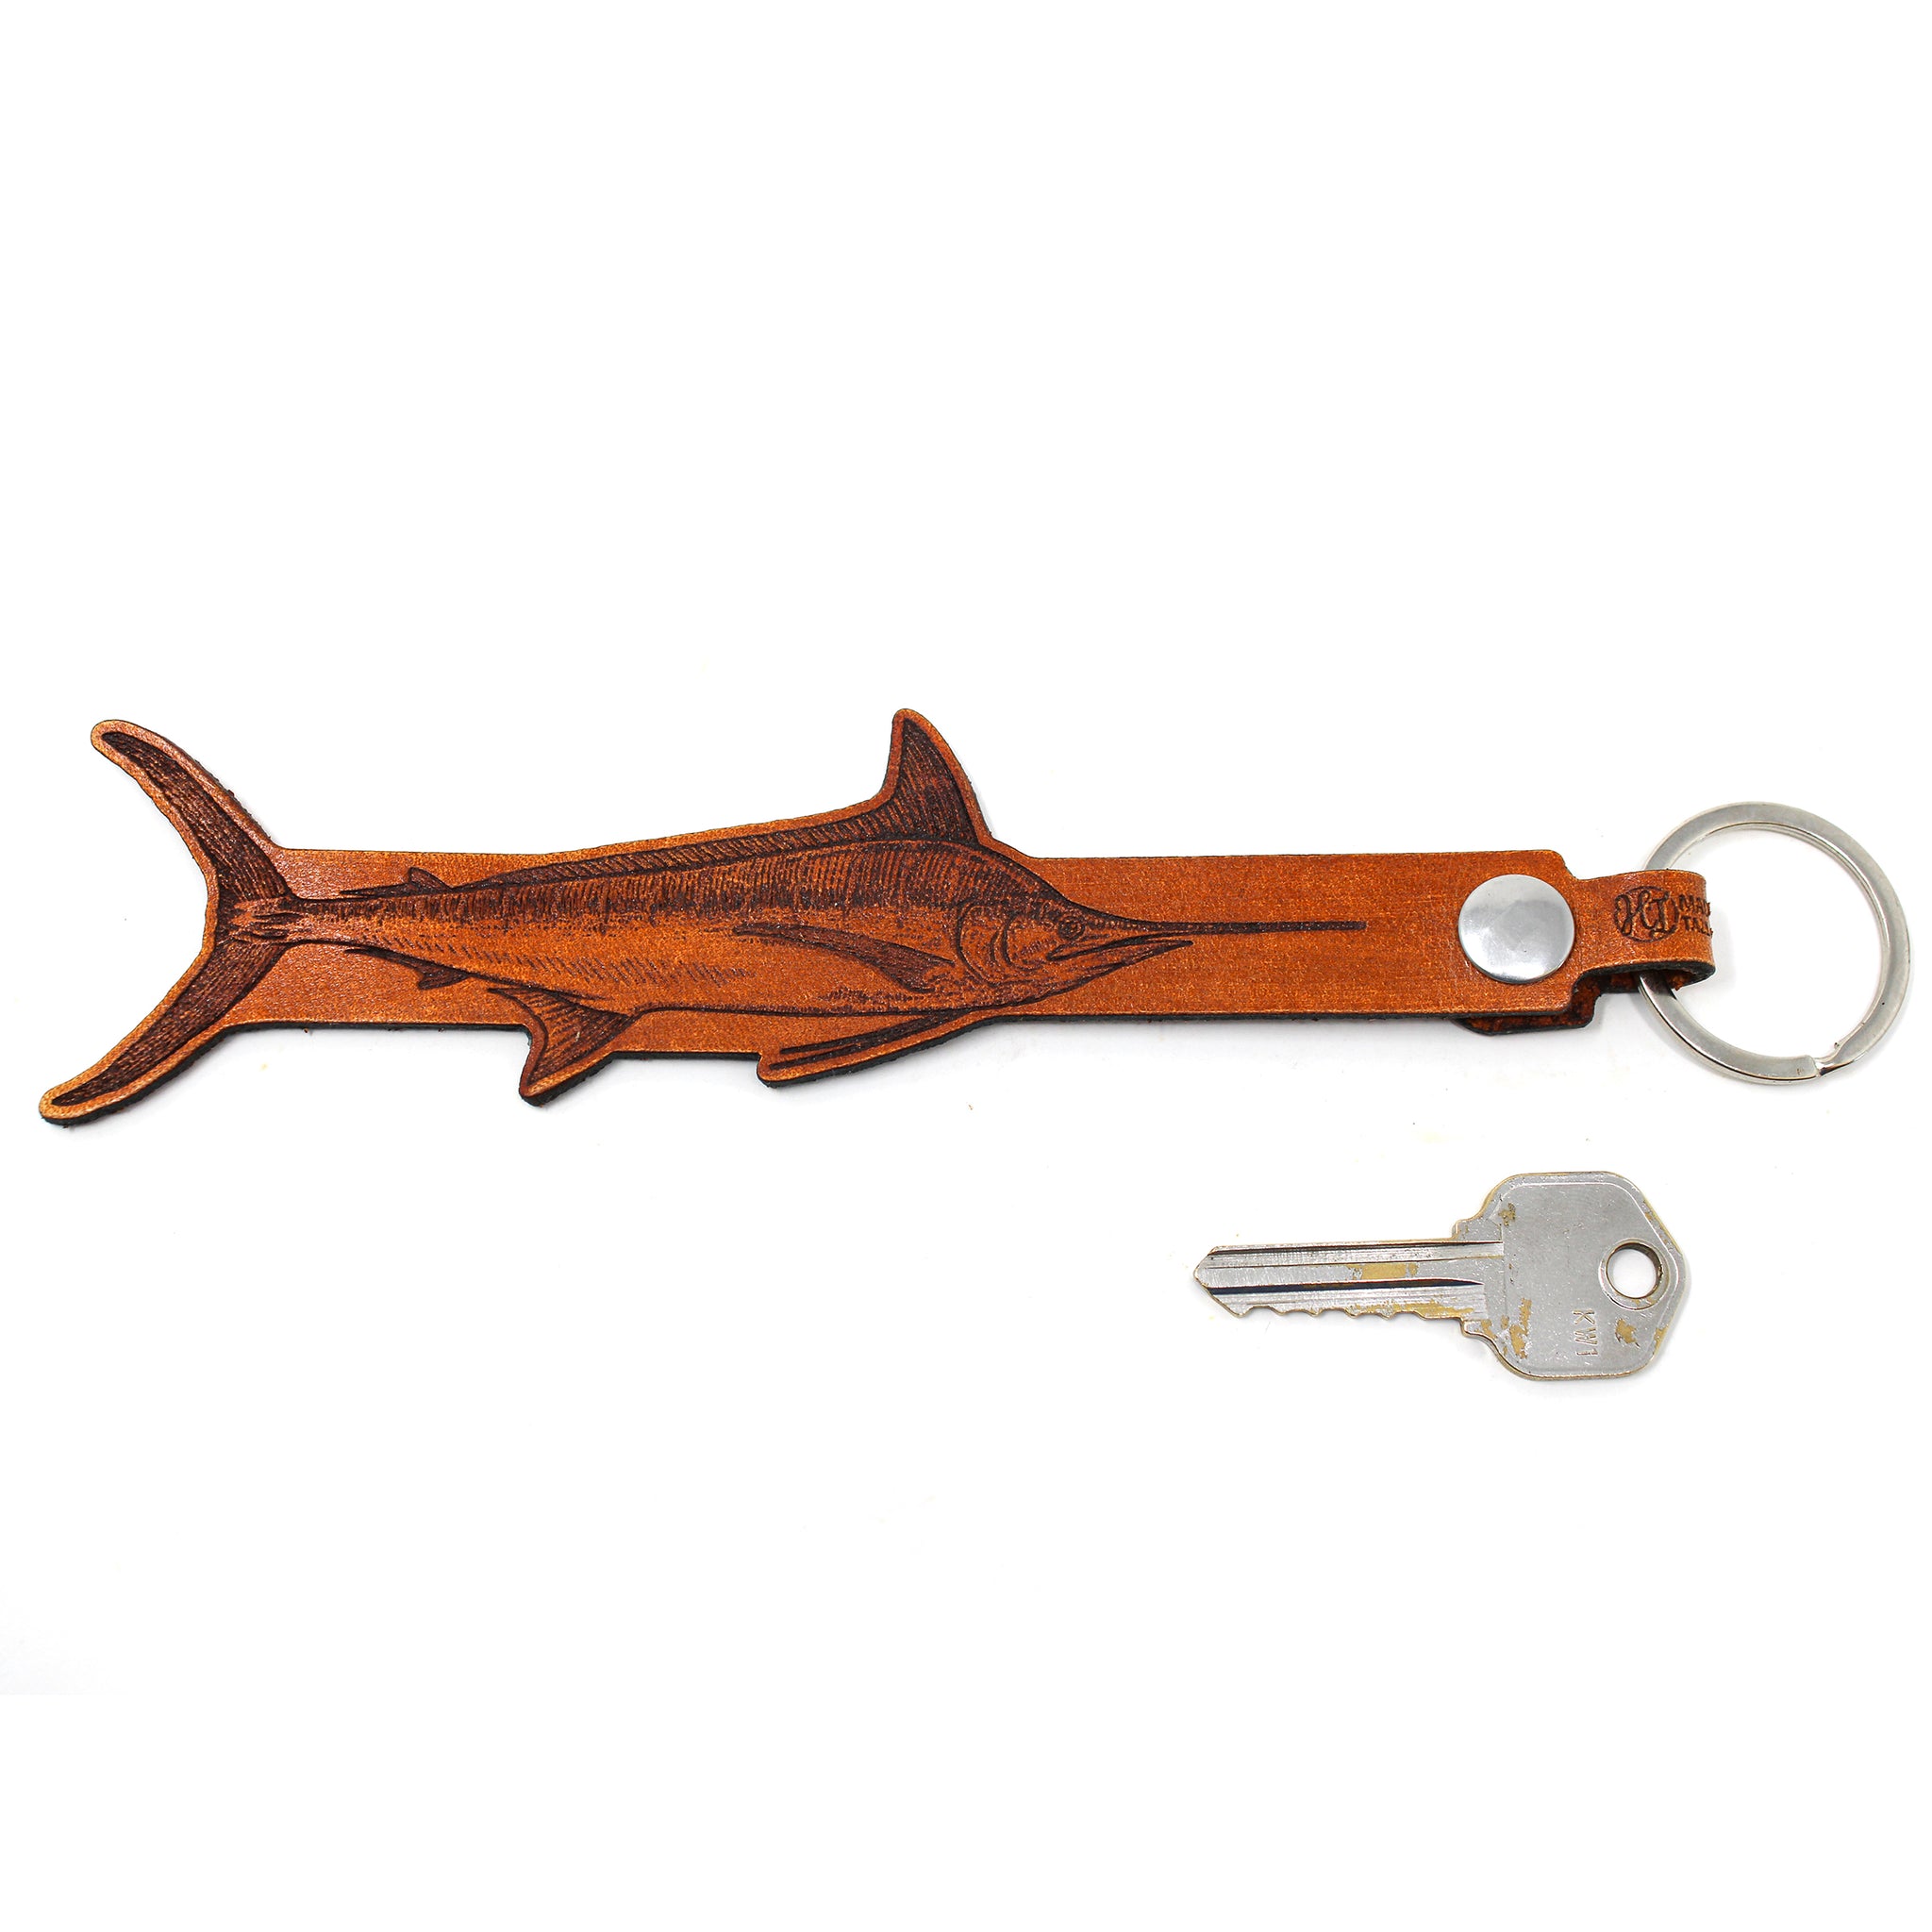 Leather Keychain - Large Marlin Keychain